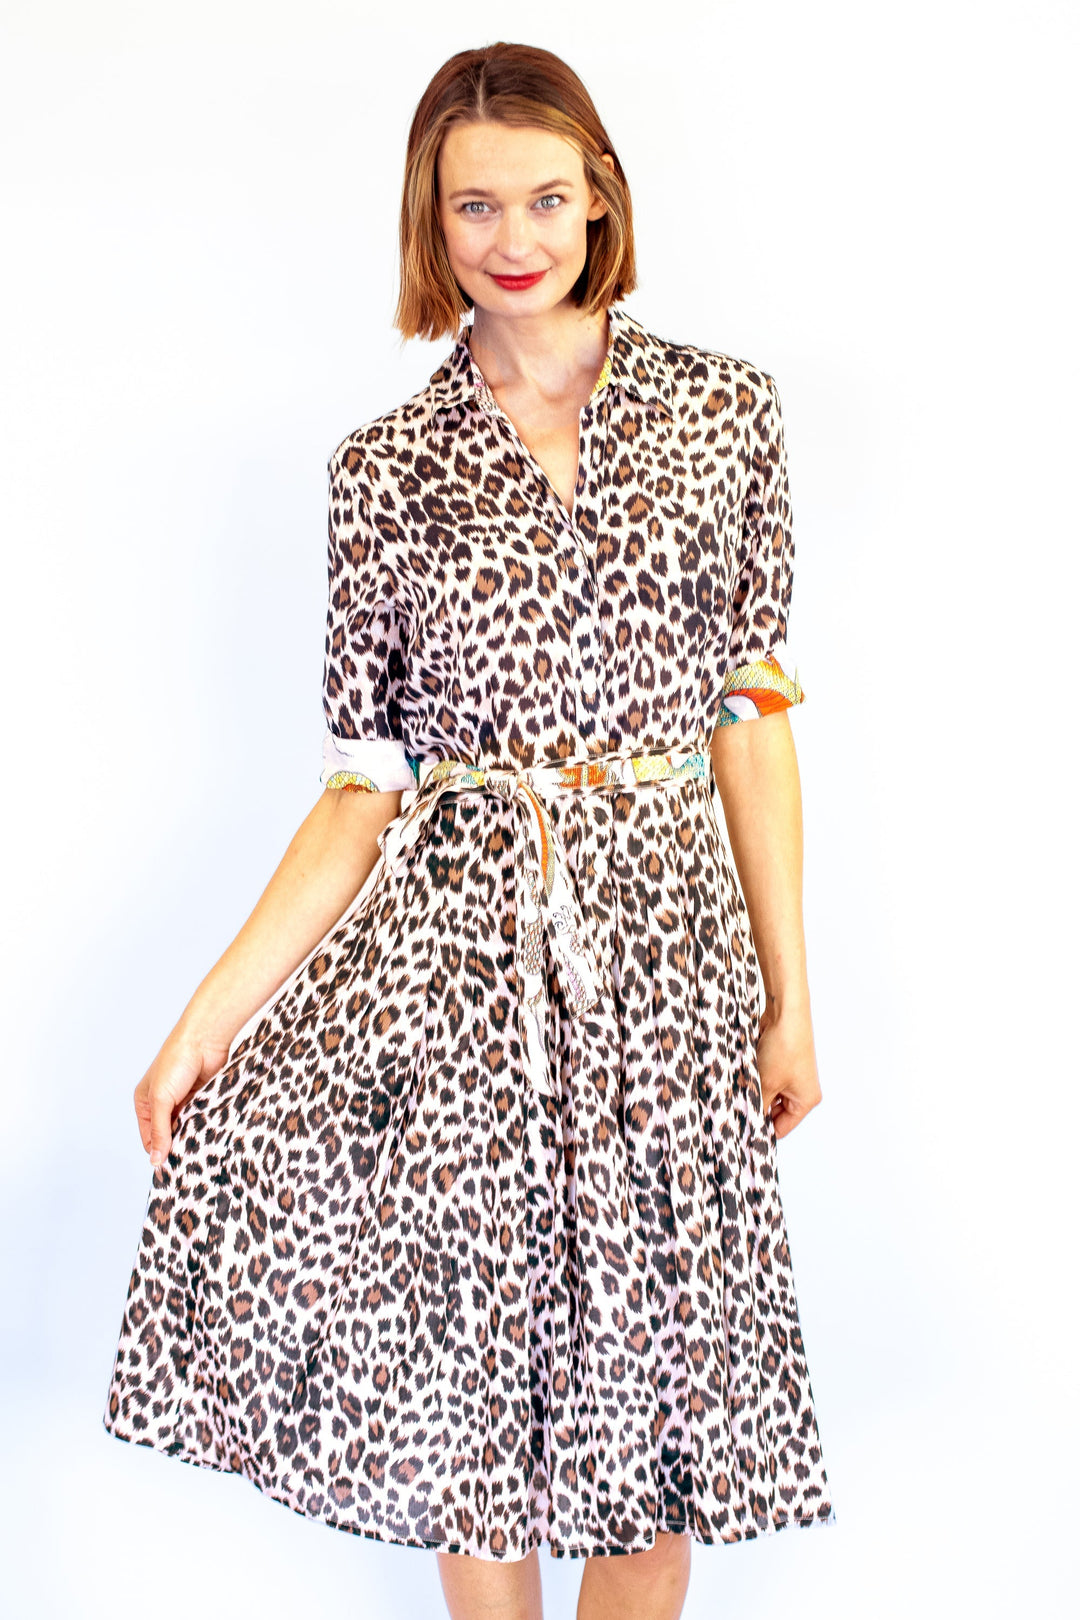 Dizzy-Lizzie Mrs. Maisel Dress Cheetah Print